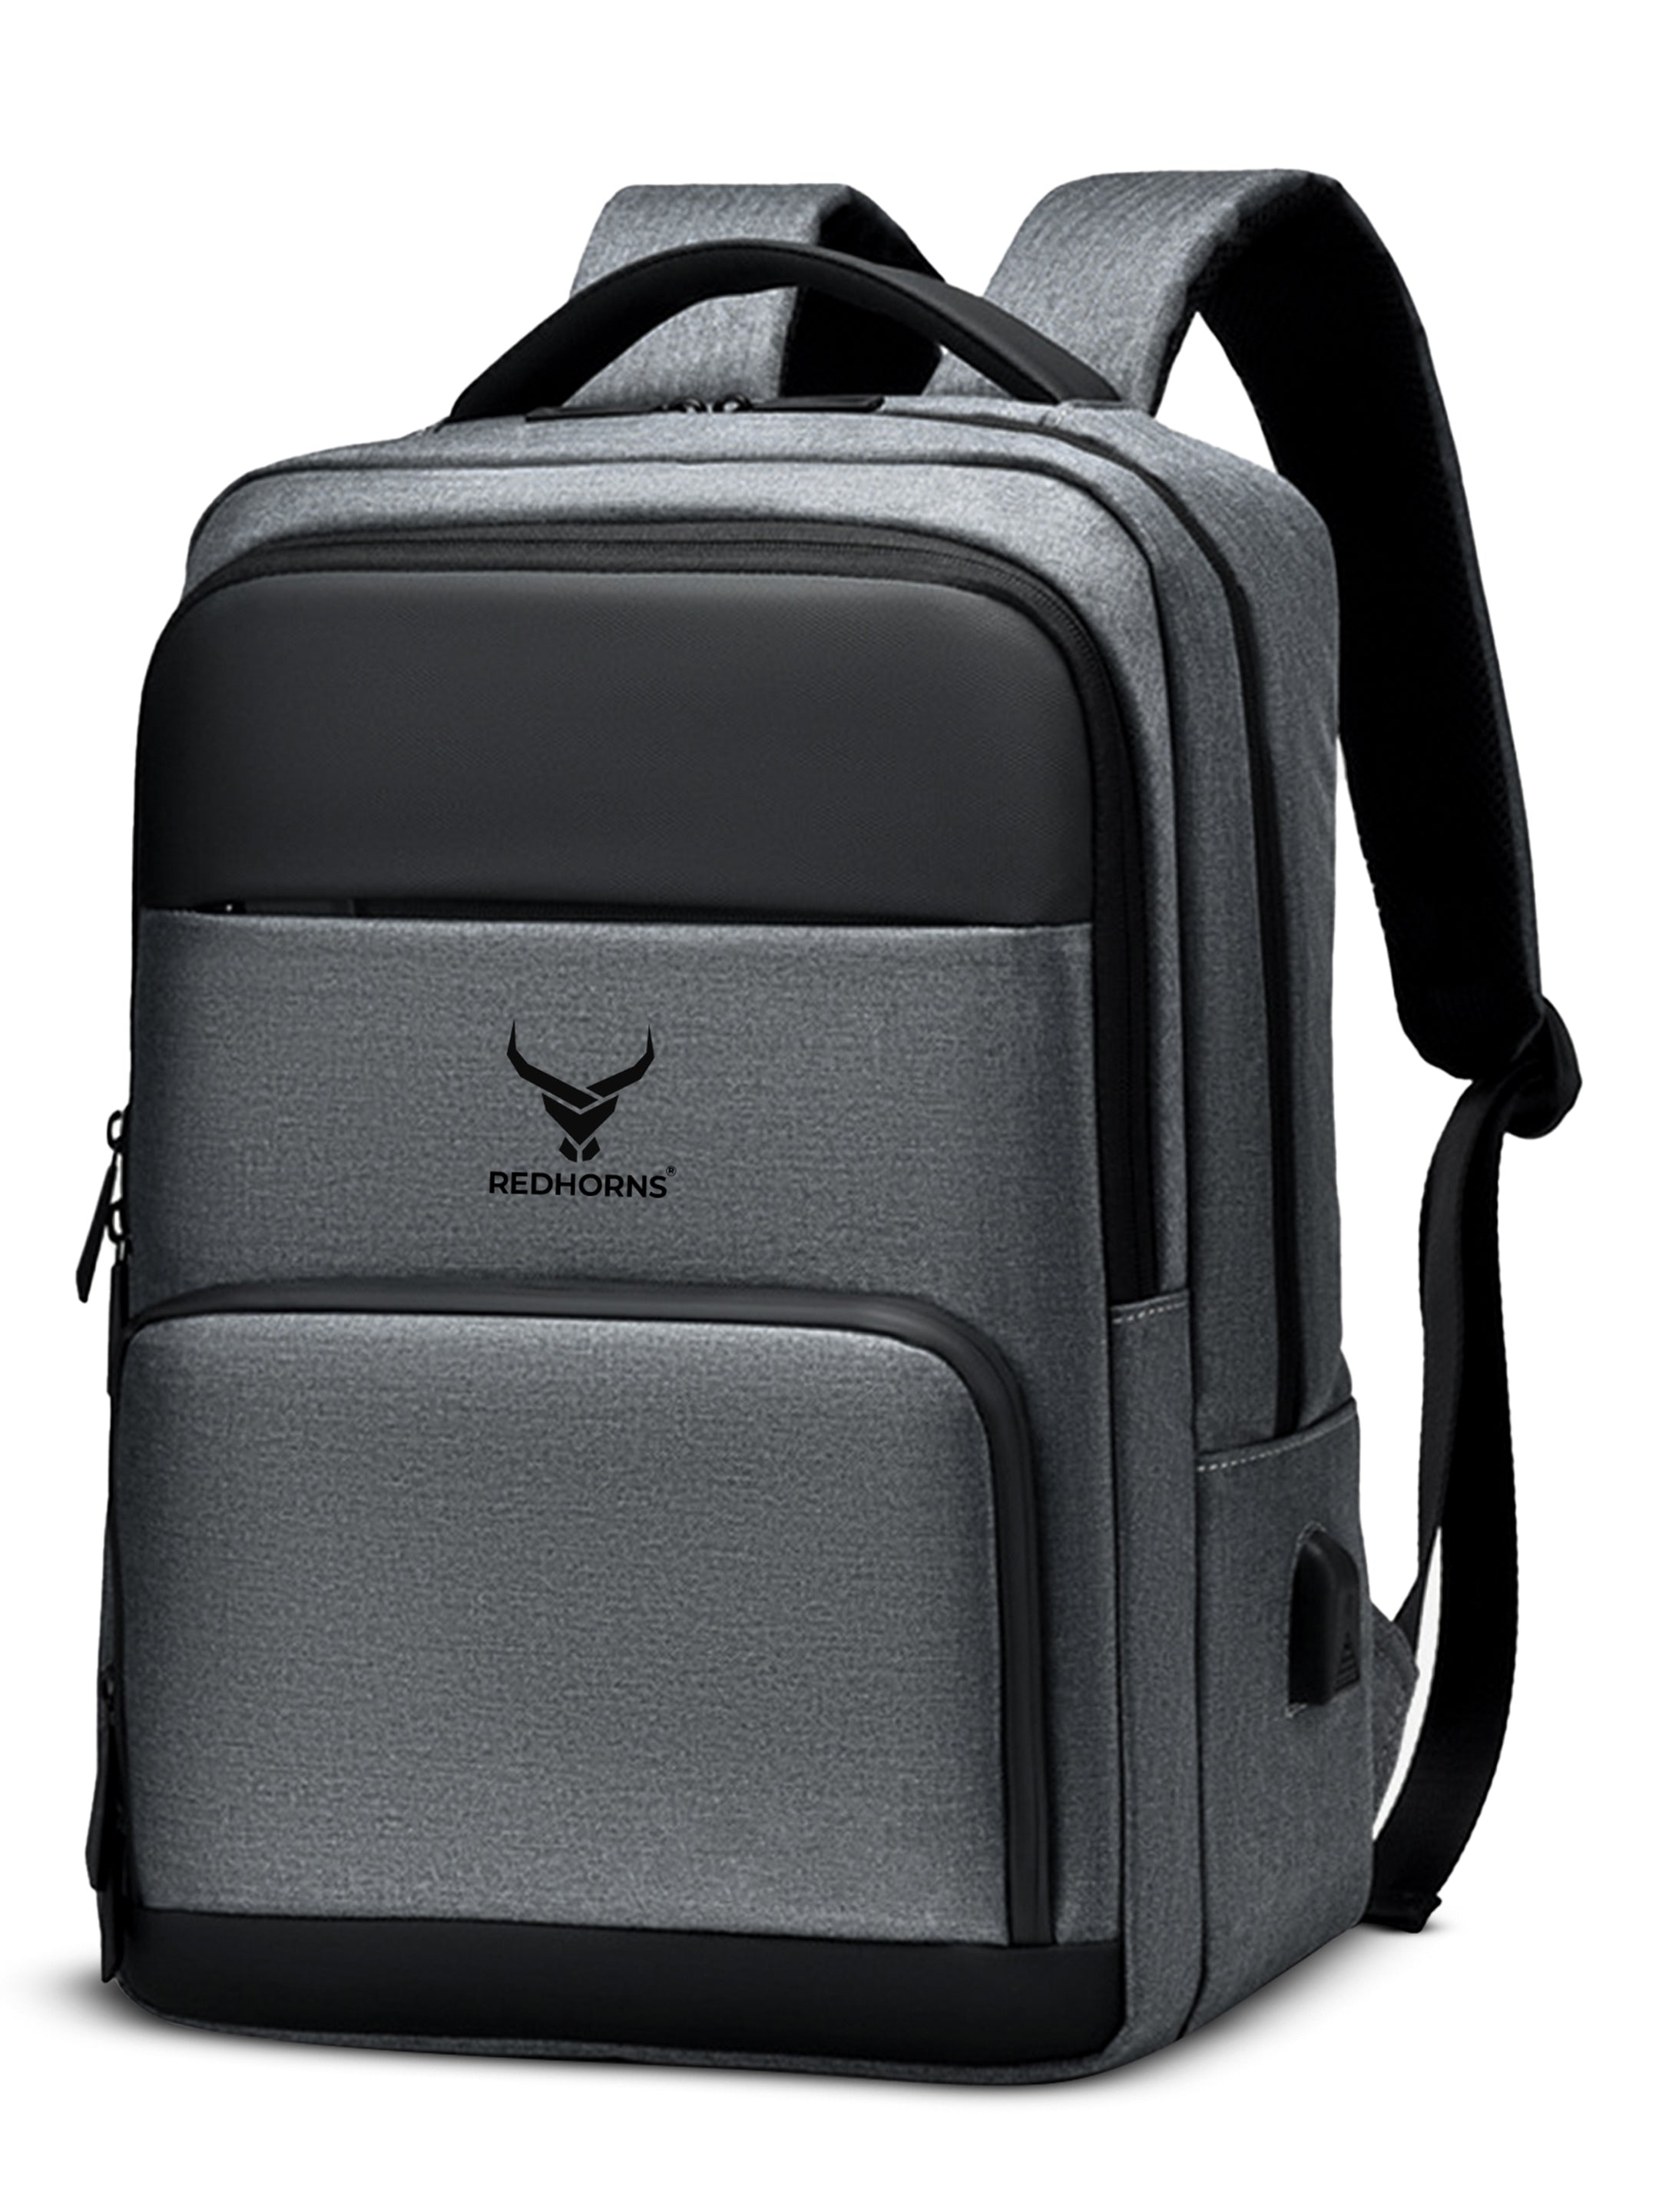 25L waterproof laptop backpack trolley strap shoulder bag travel backpack business tour corporate look#color_grey